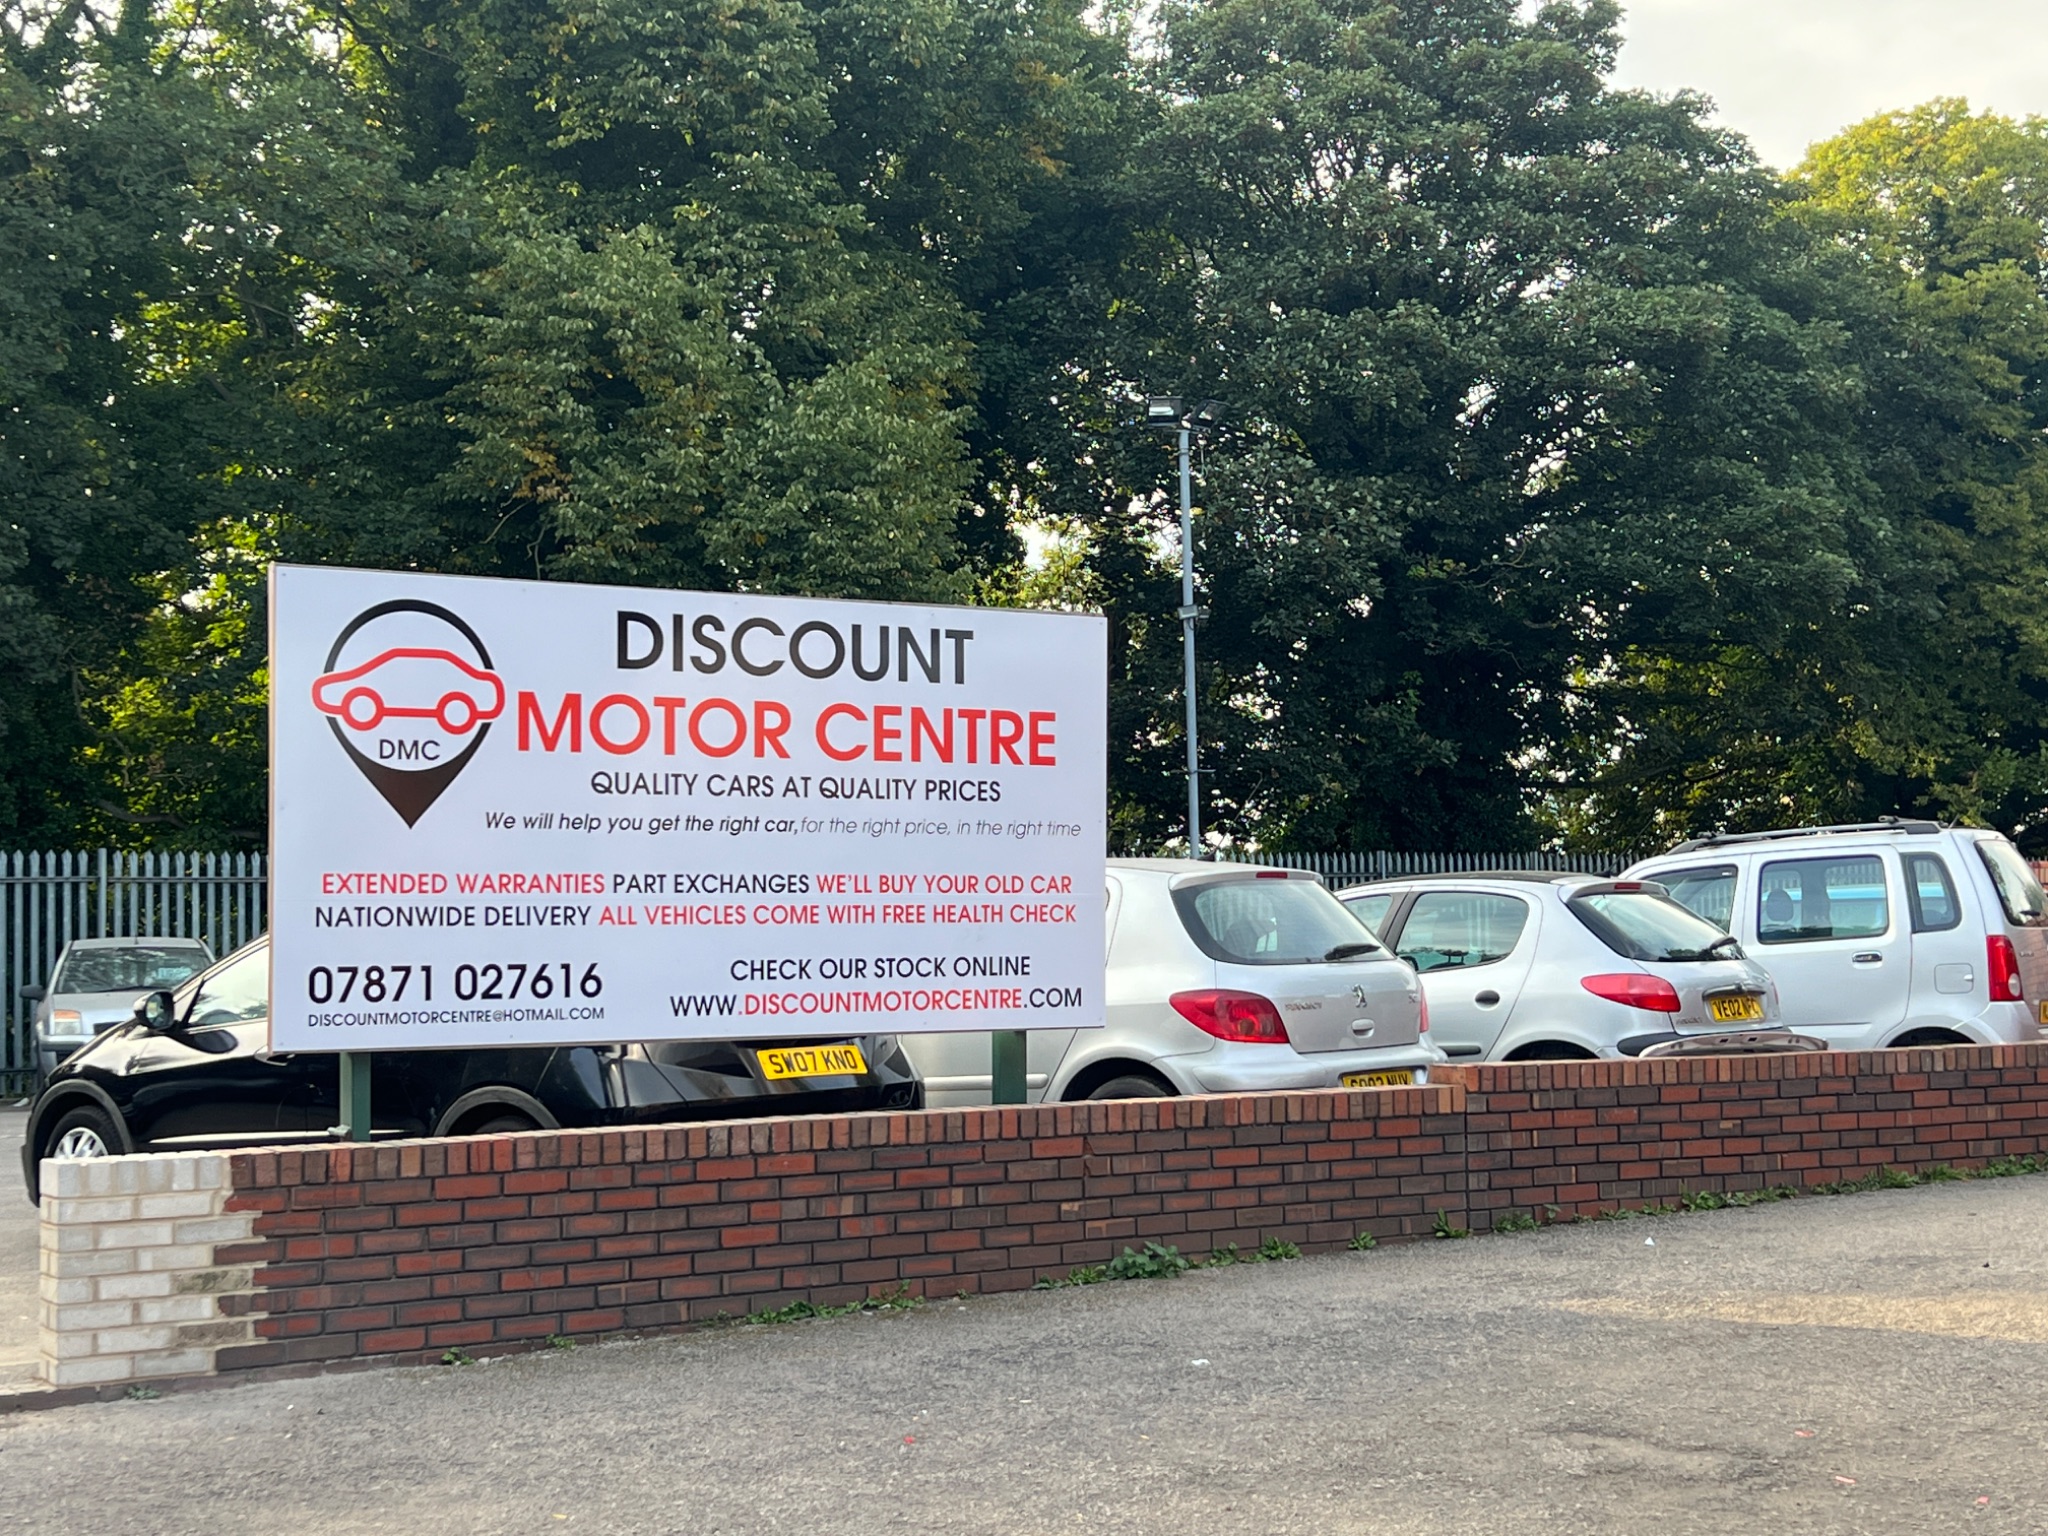 DISCOUNT MOTOR CENTRE LIMITED | Car dealership in Rotherham | AutoTrader